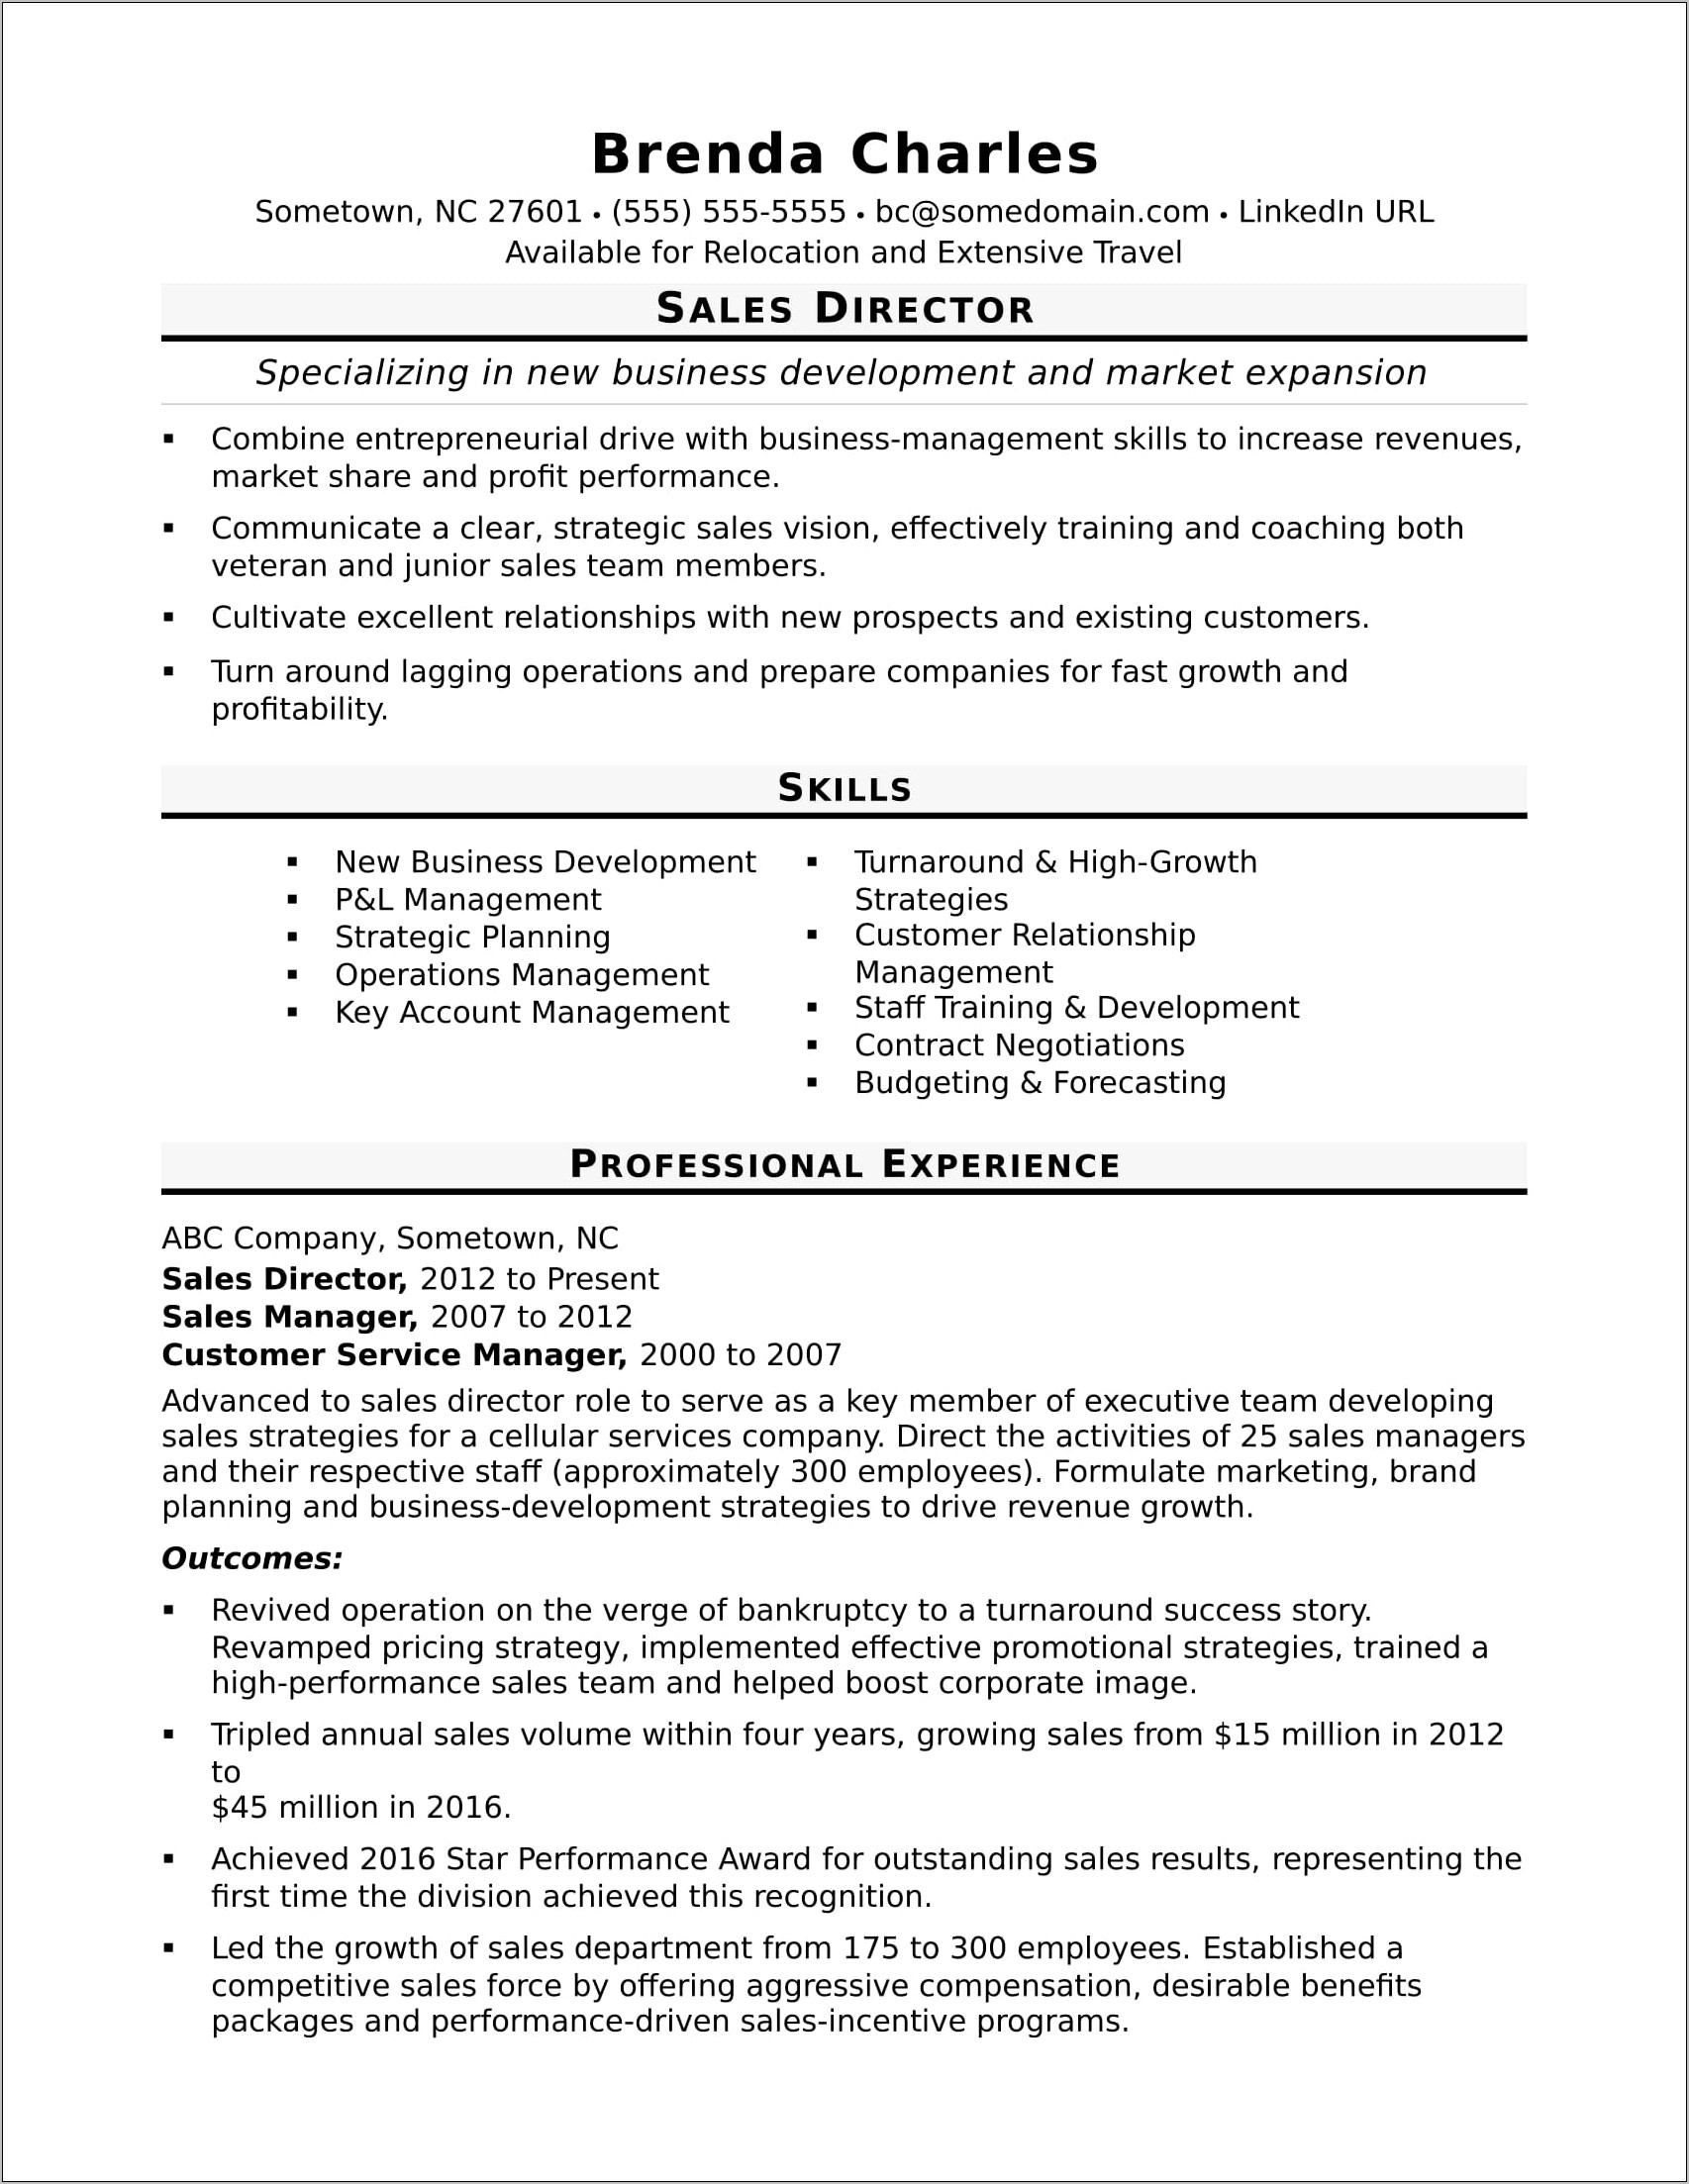 Resume Descriptions On Managment And Training Development